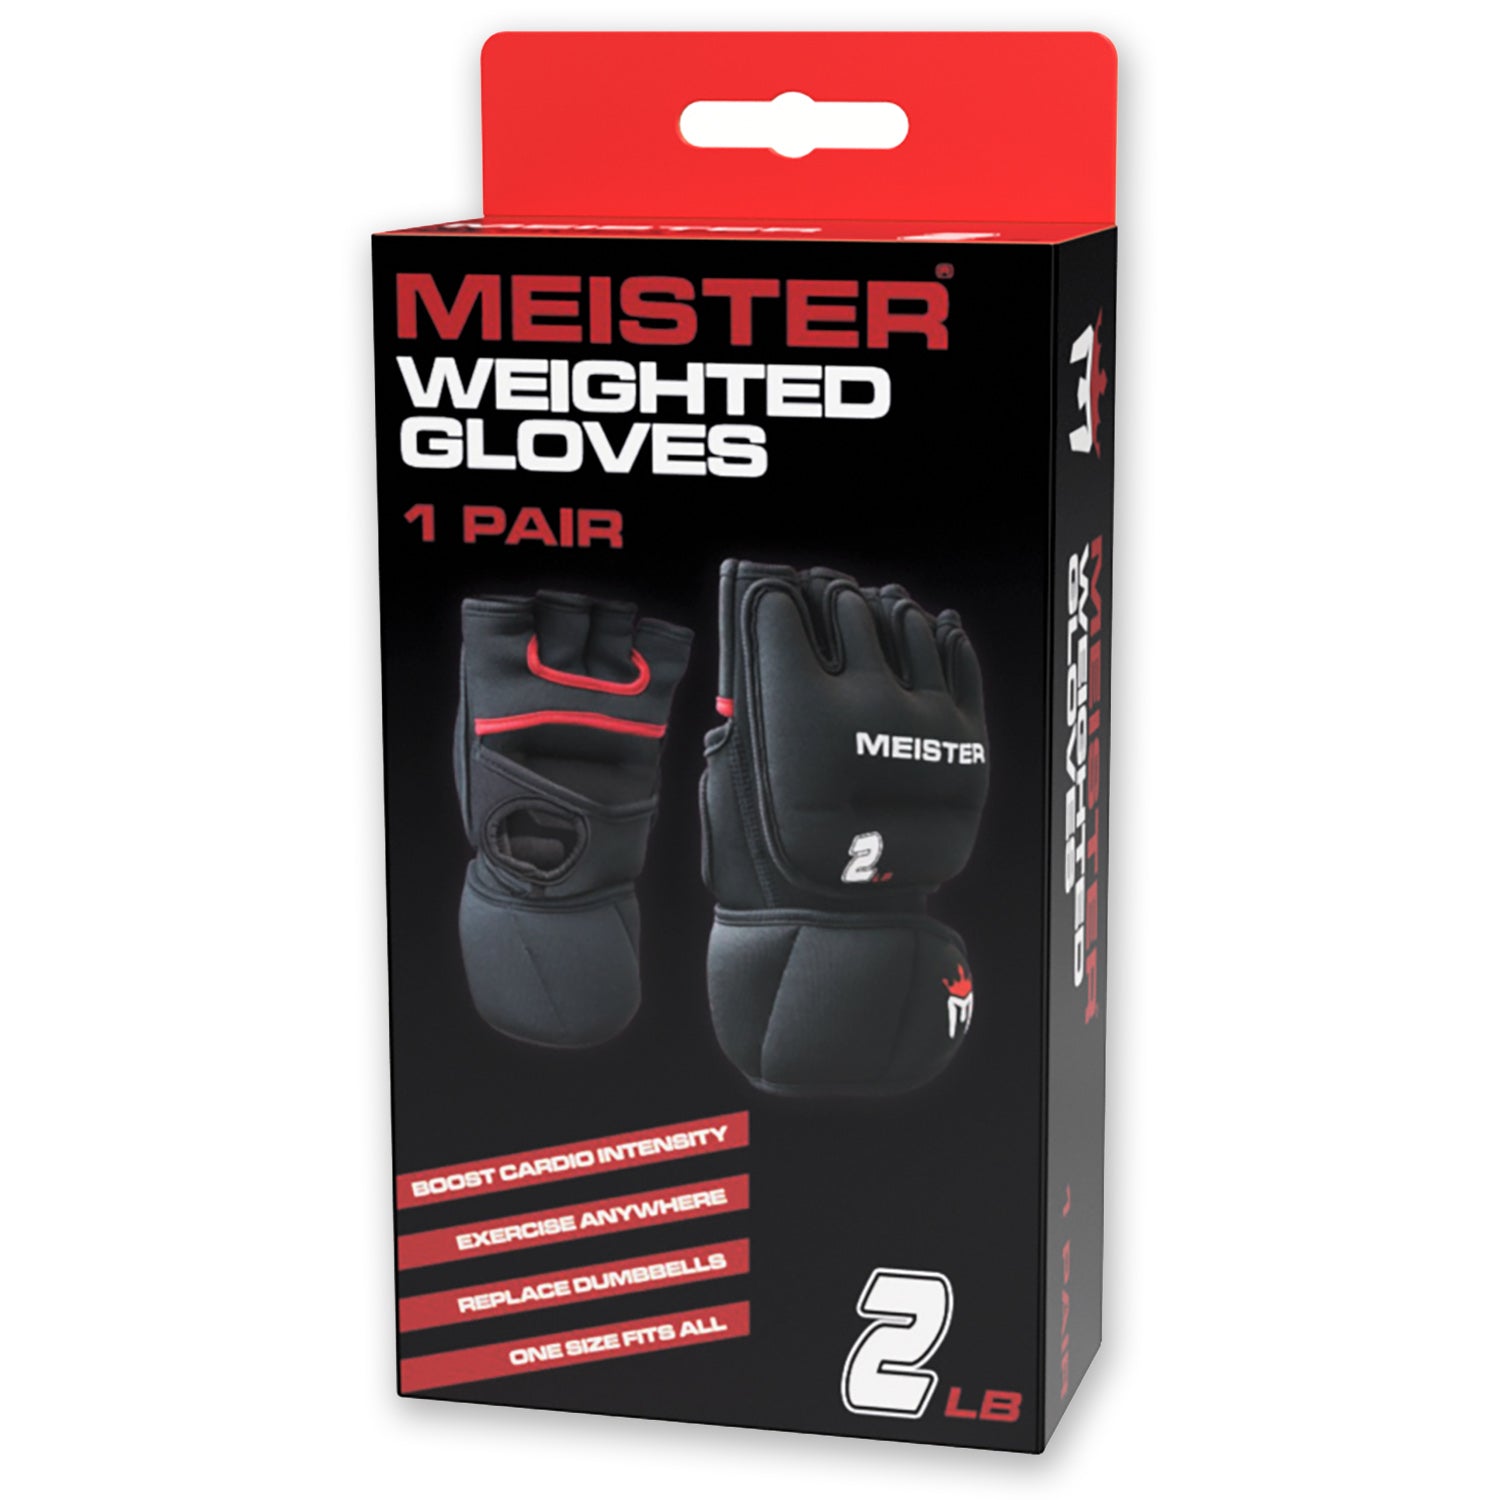 Meister 2lb Neoprene Weighted Gloves - Black/Red (Pair)